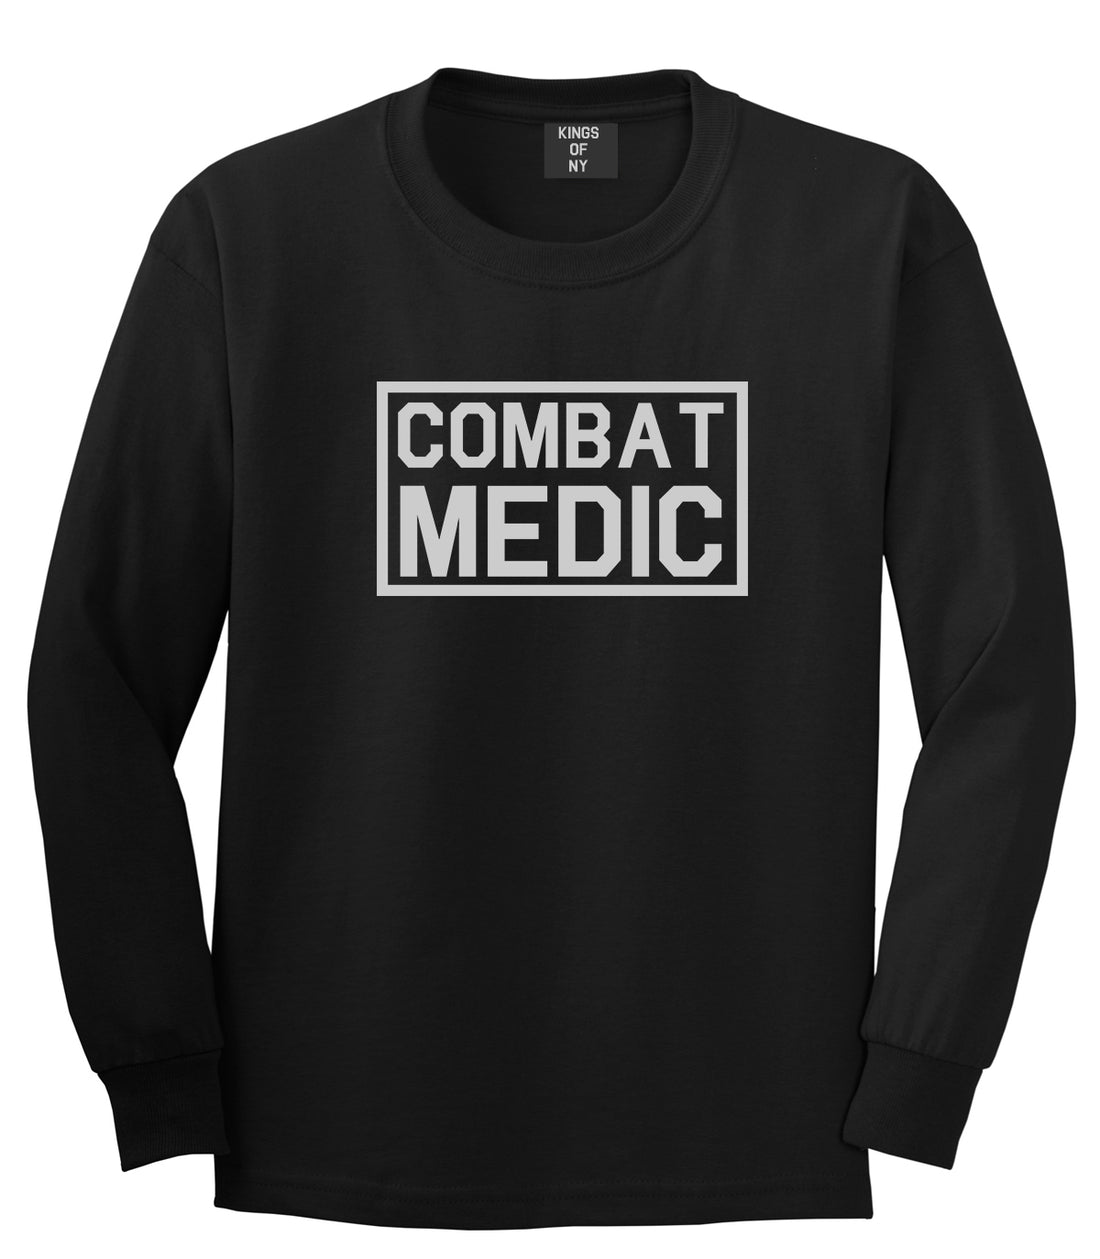 Combat Medic Black Long Sleeve T-Shirt by Kings Of NY